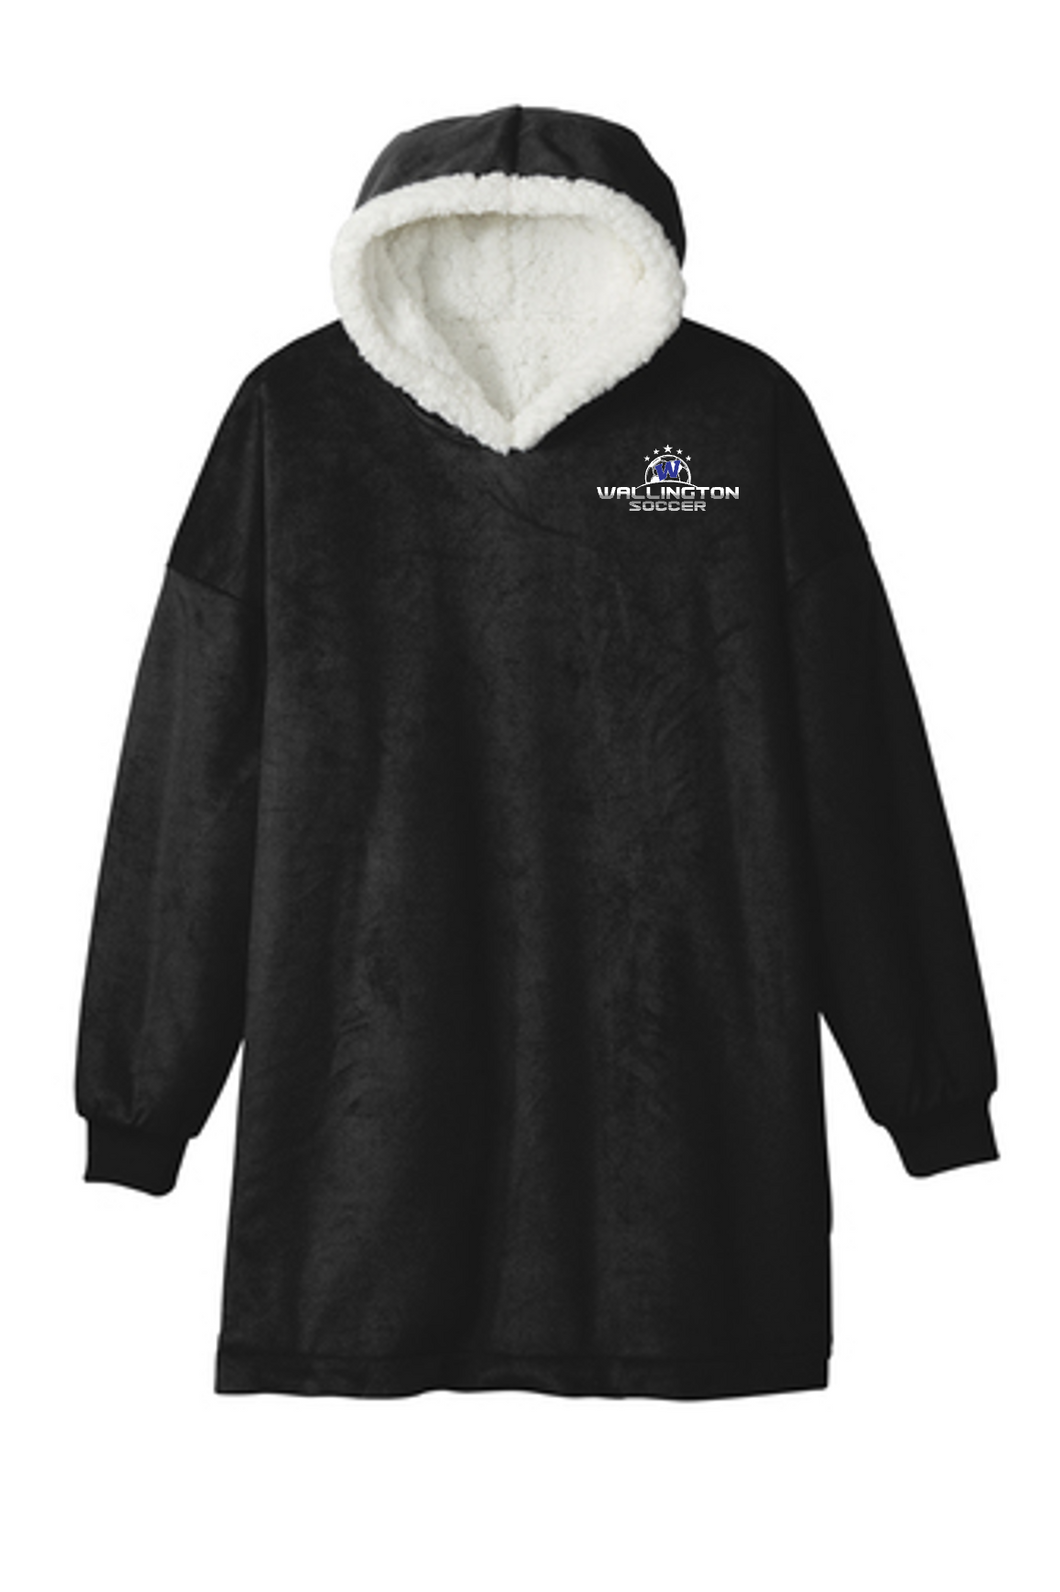 *Port Authority® Mountain Lodge Wearable Blanket - Wallington Boys Soccer